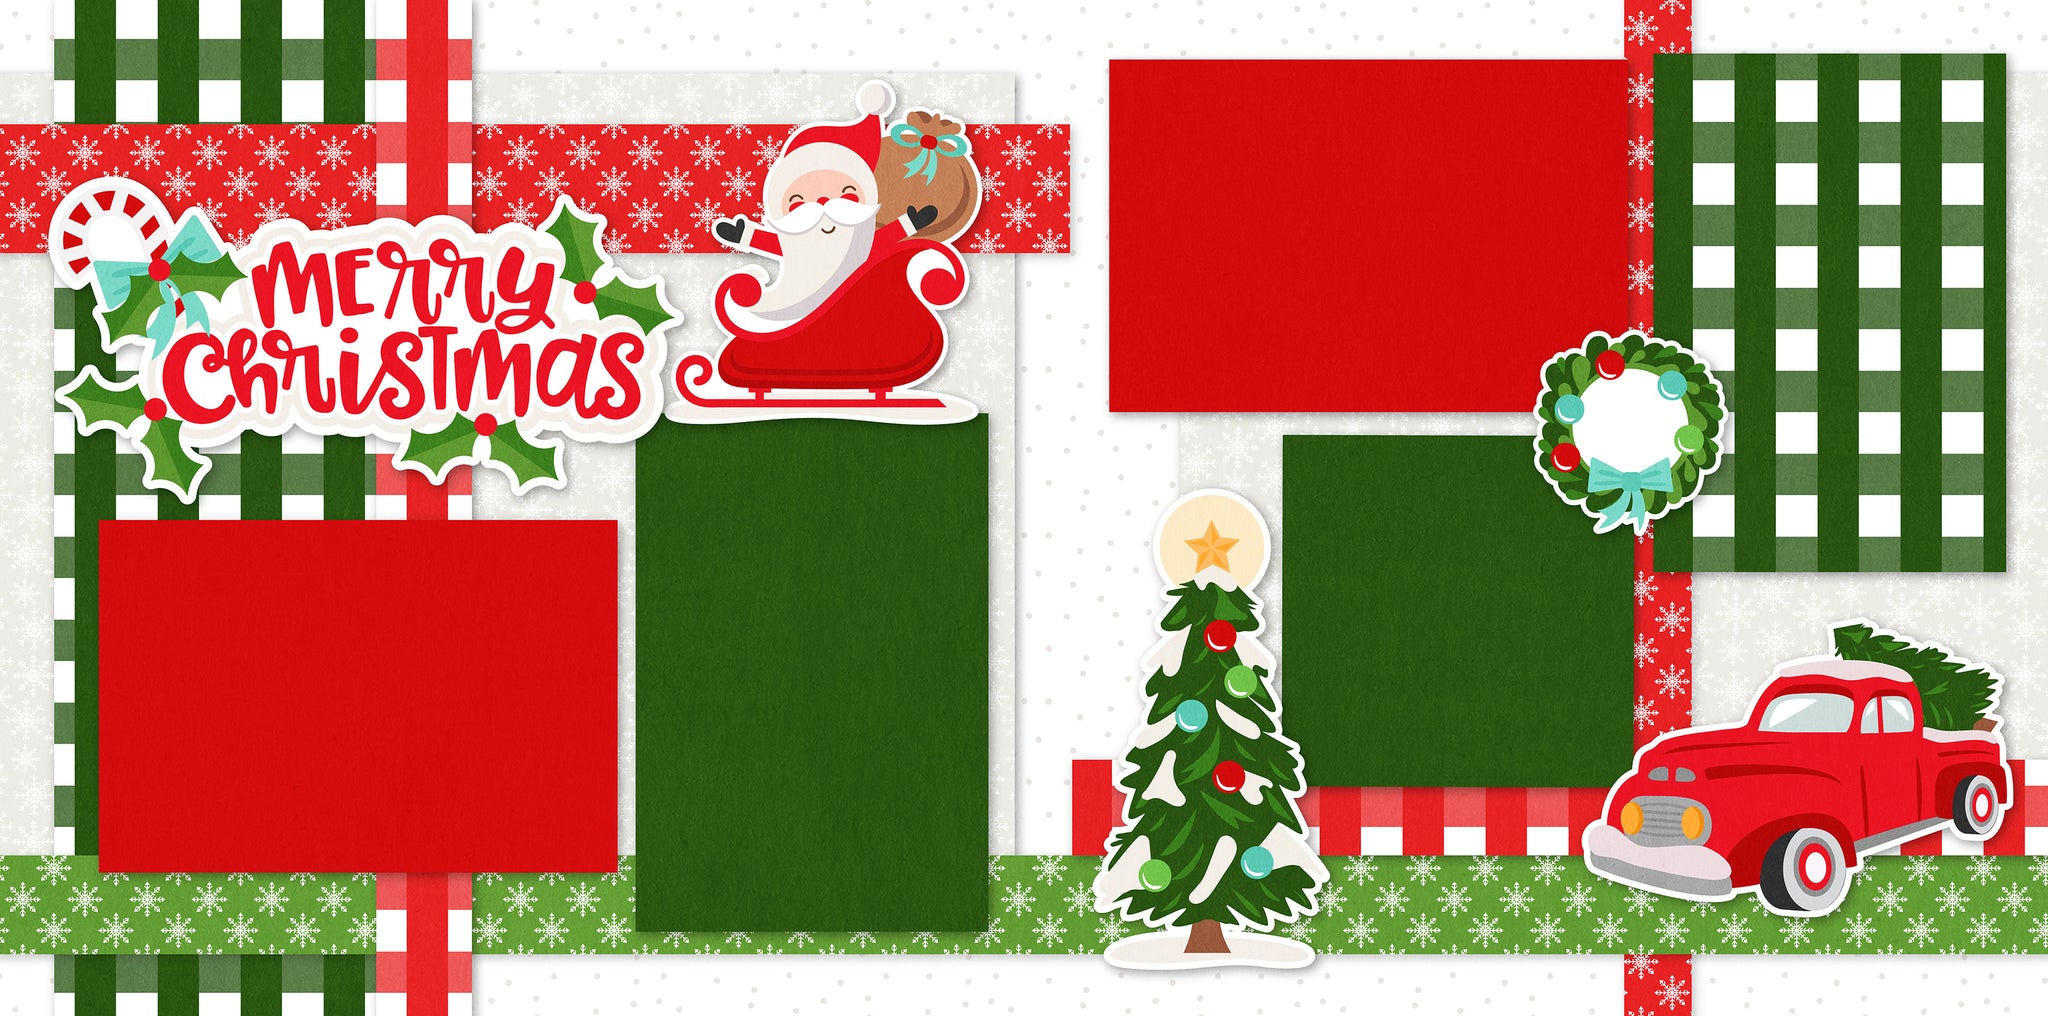 Festive Christmas - Stickers Scrapbook Christmas, planner – MISS KATE